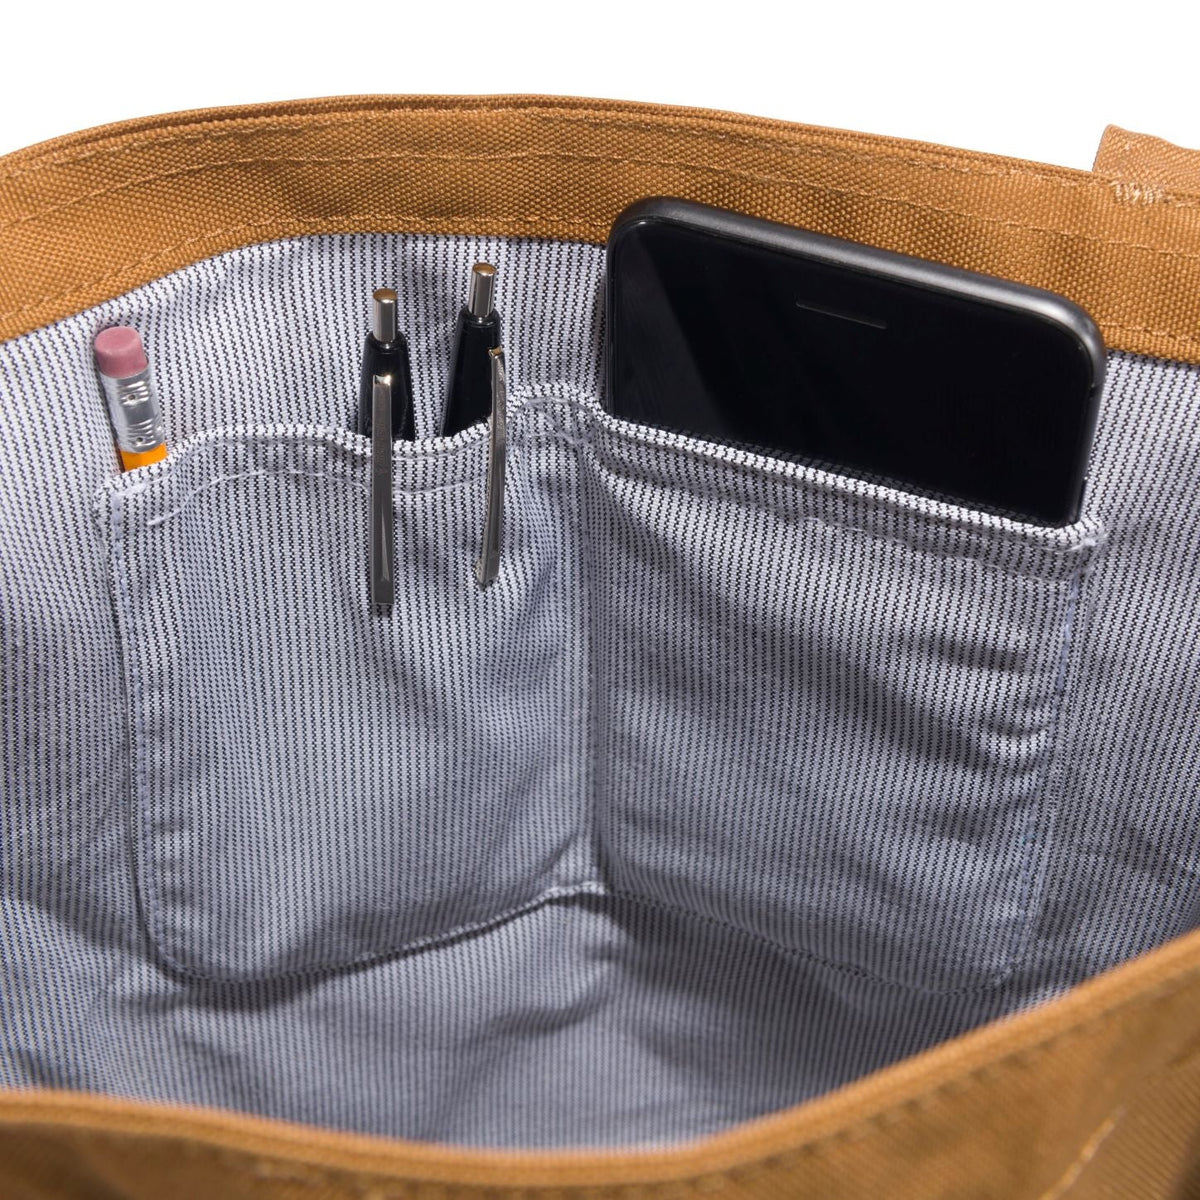 Carhartt Vertical Open Tote Bag - Work World - Workwear, Work Boots, Safety Gear